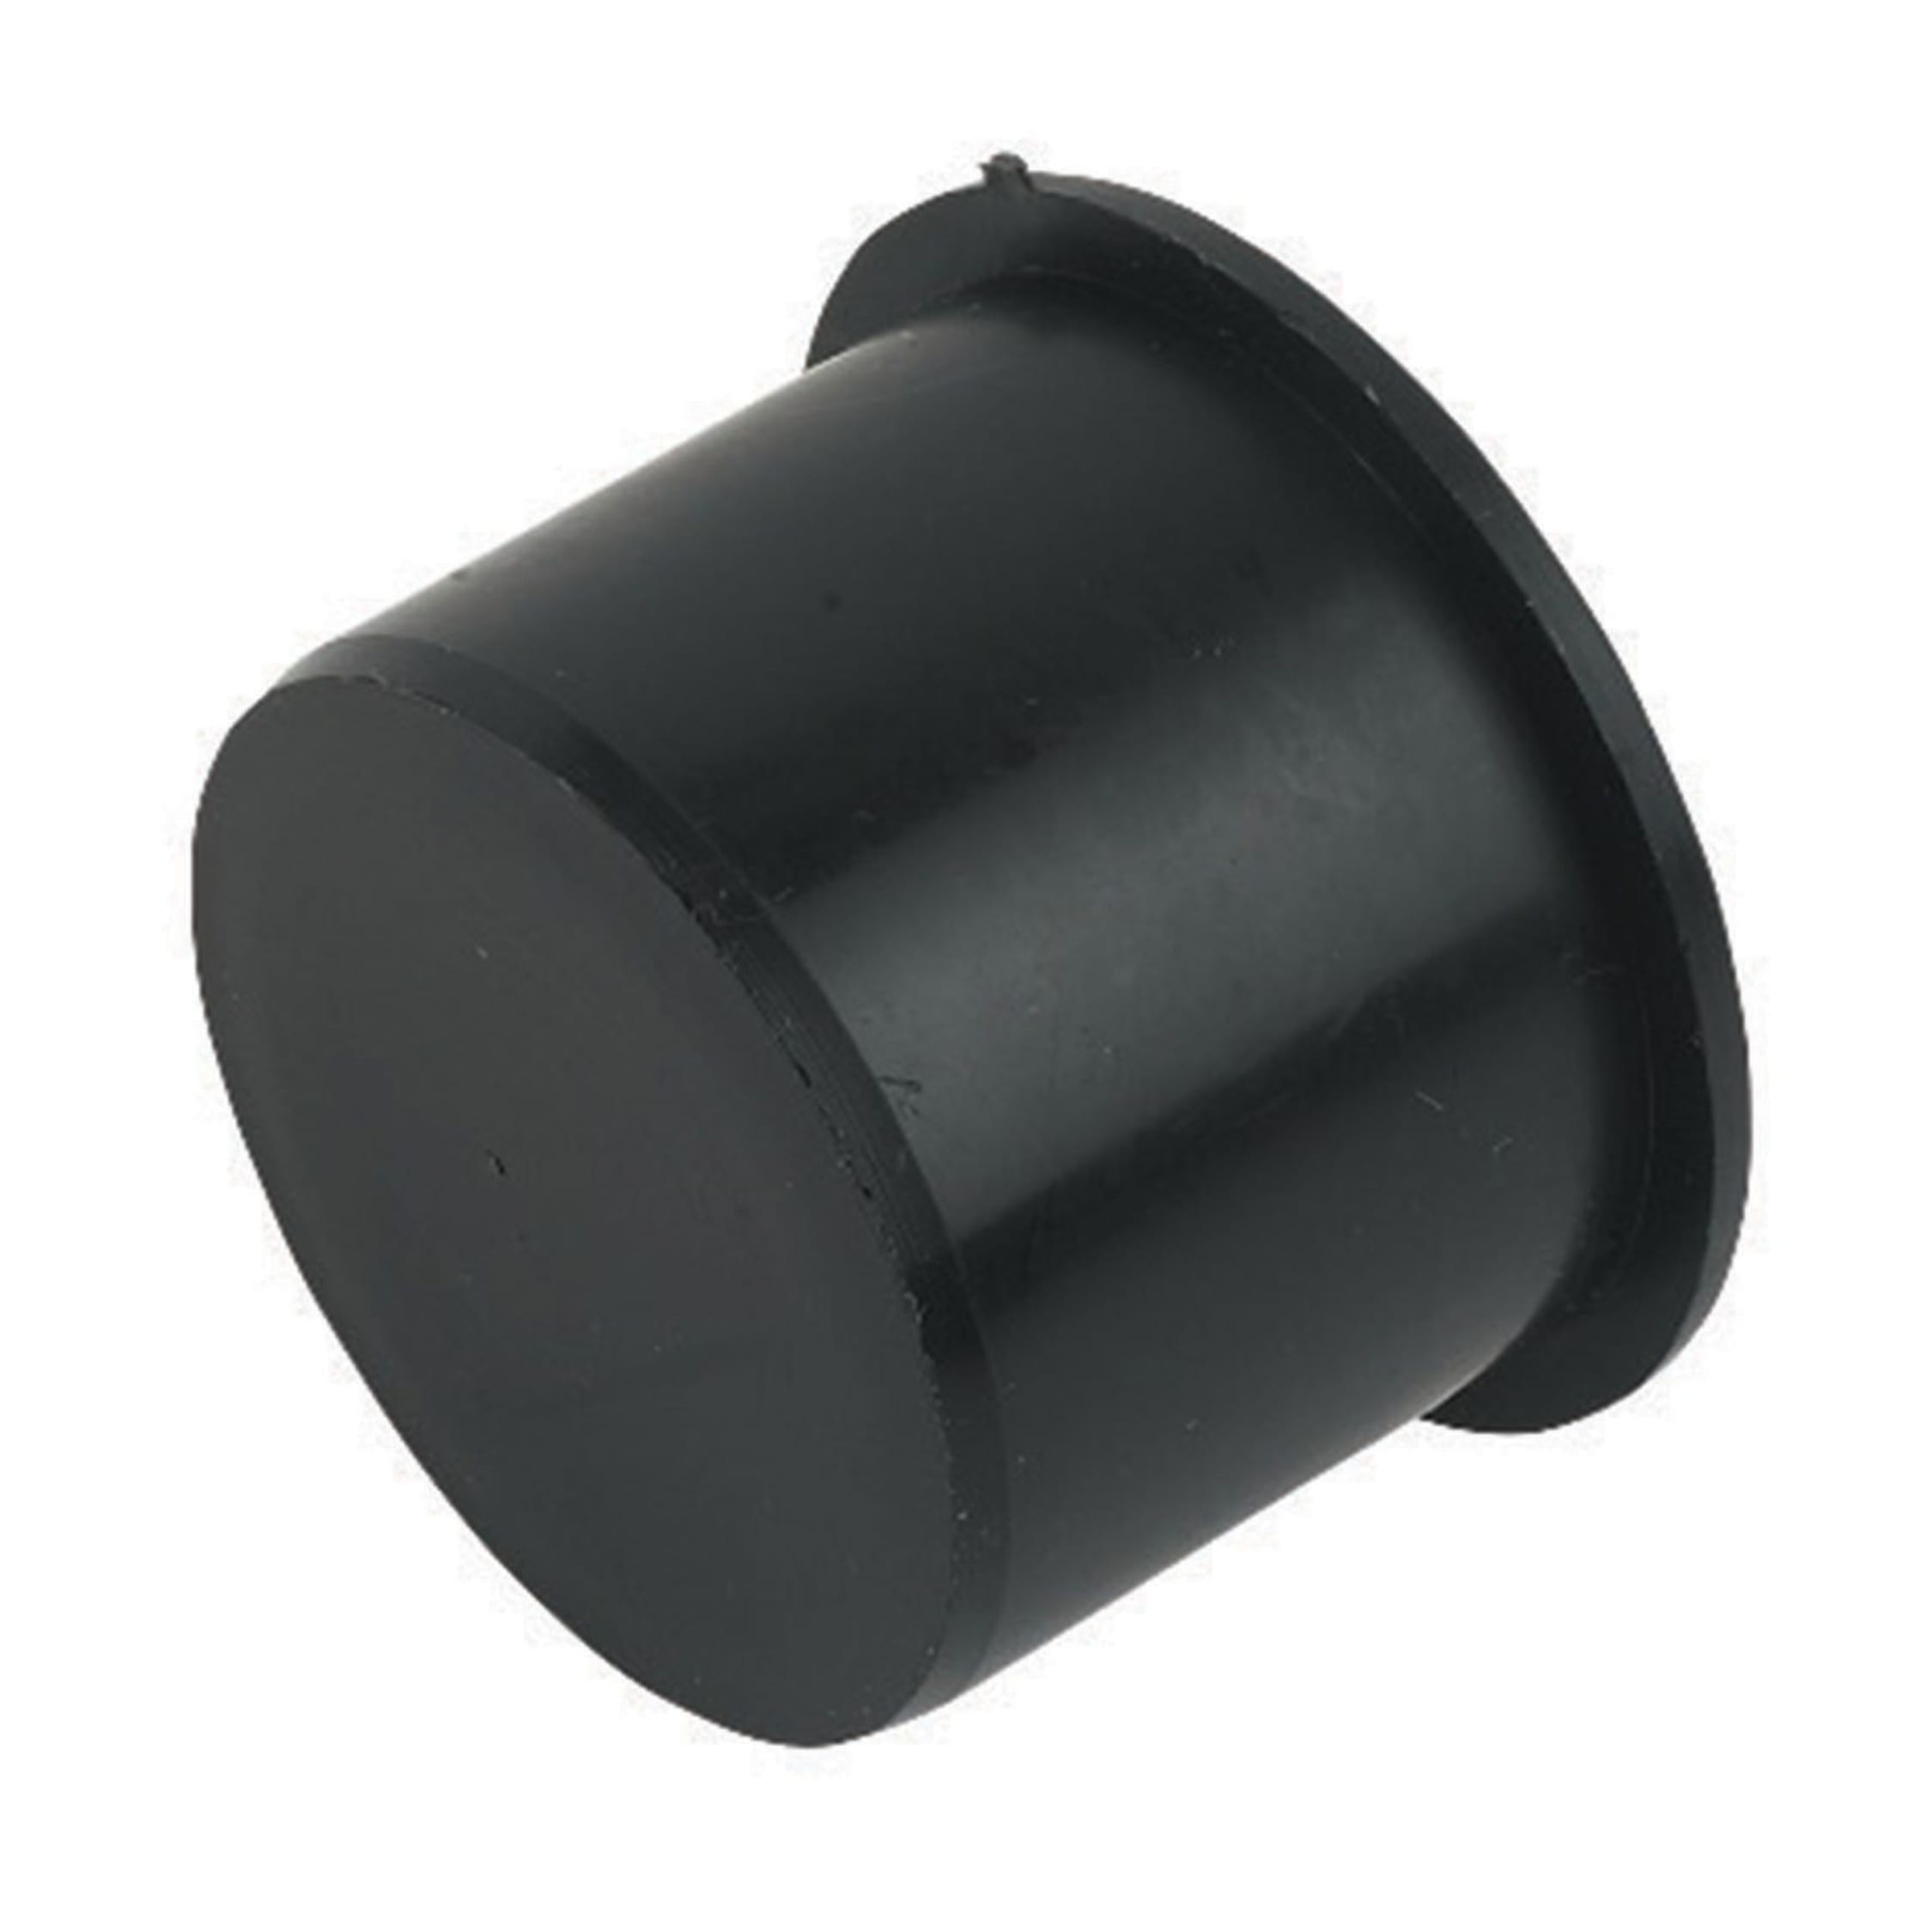 5 x 32mm Push Fit Waste Socket Plug Grey Blanking End Cap Stop Pipe Water Drain 